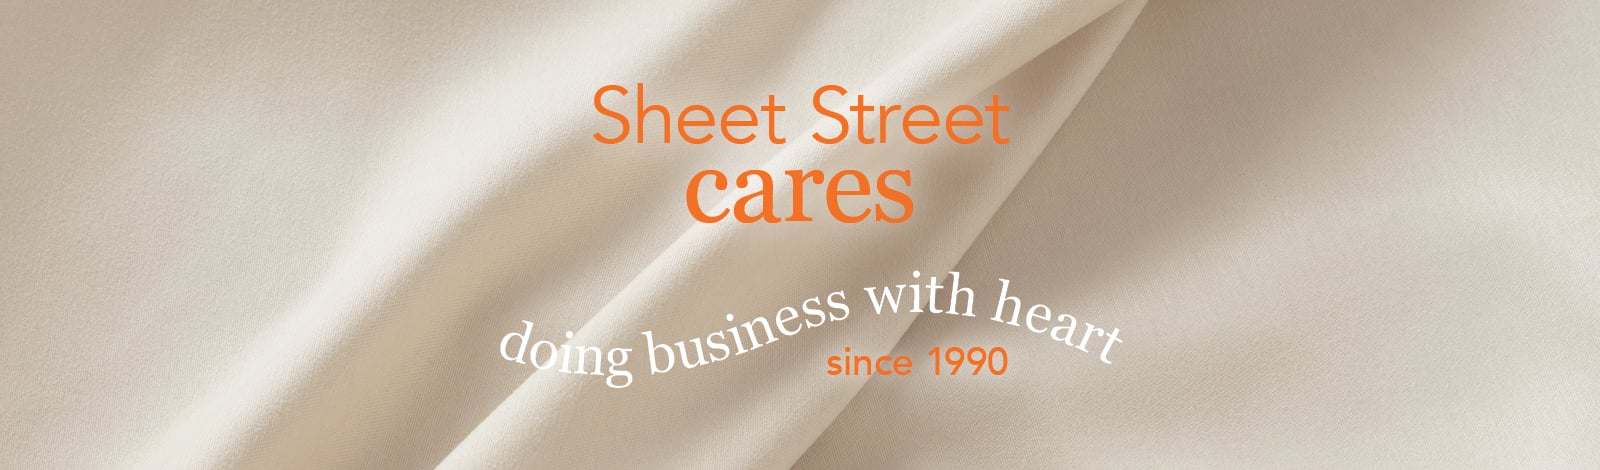 sheet street cares banner